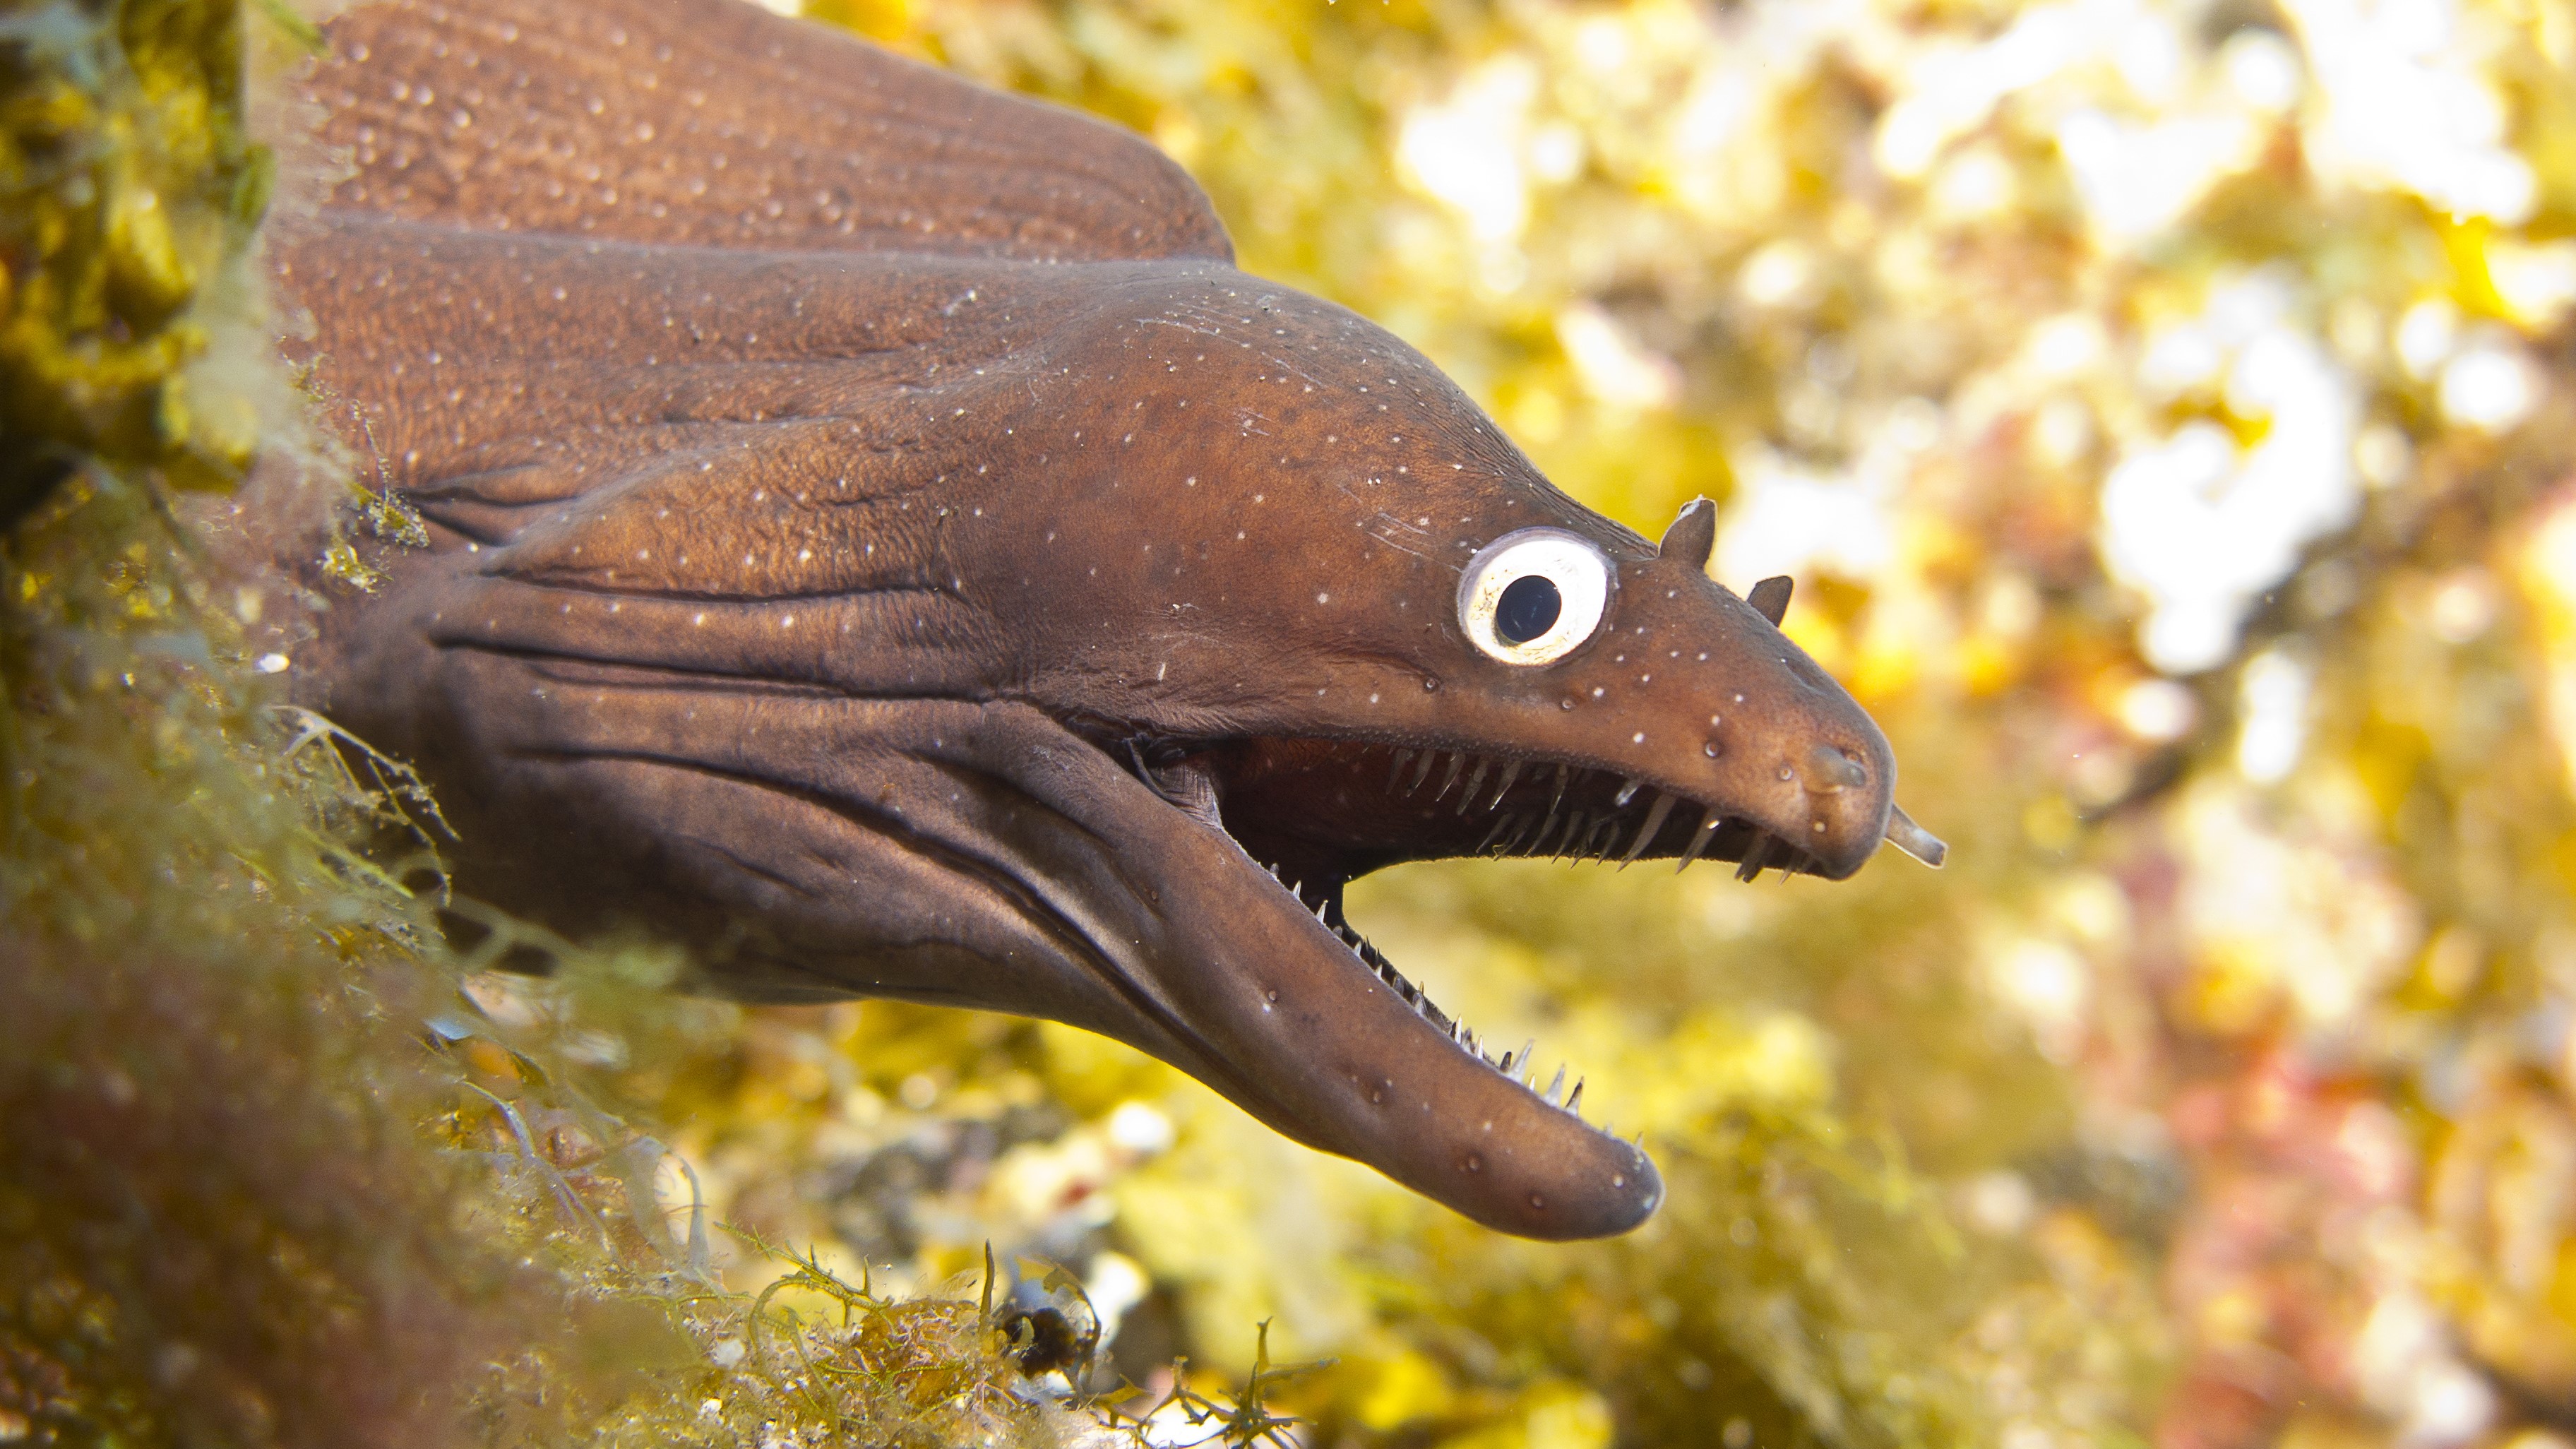 A moray eel (Muraena augusti)